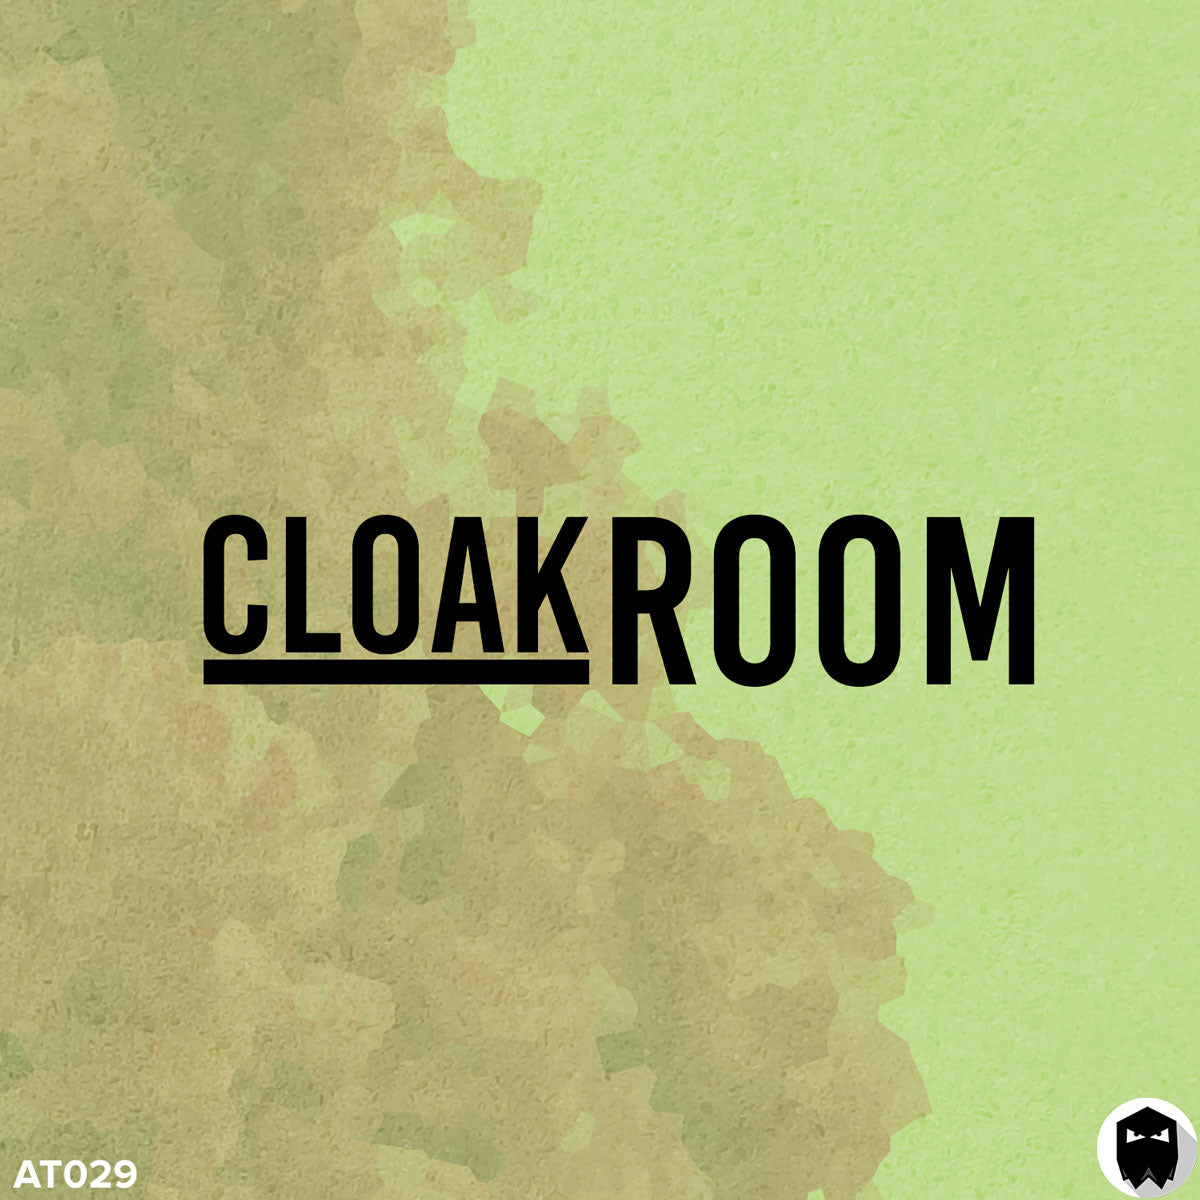 Cloakroom